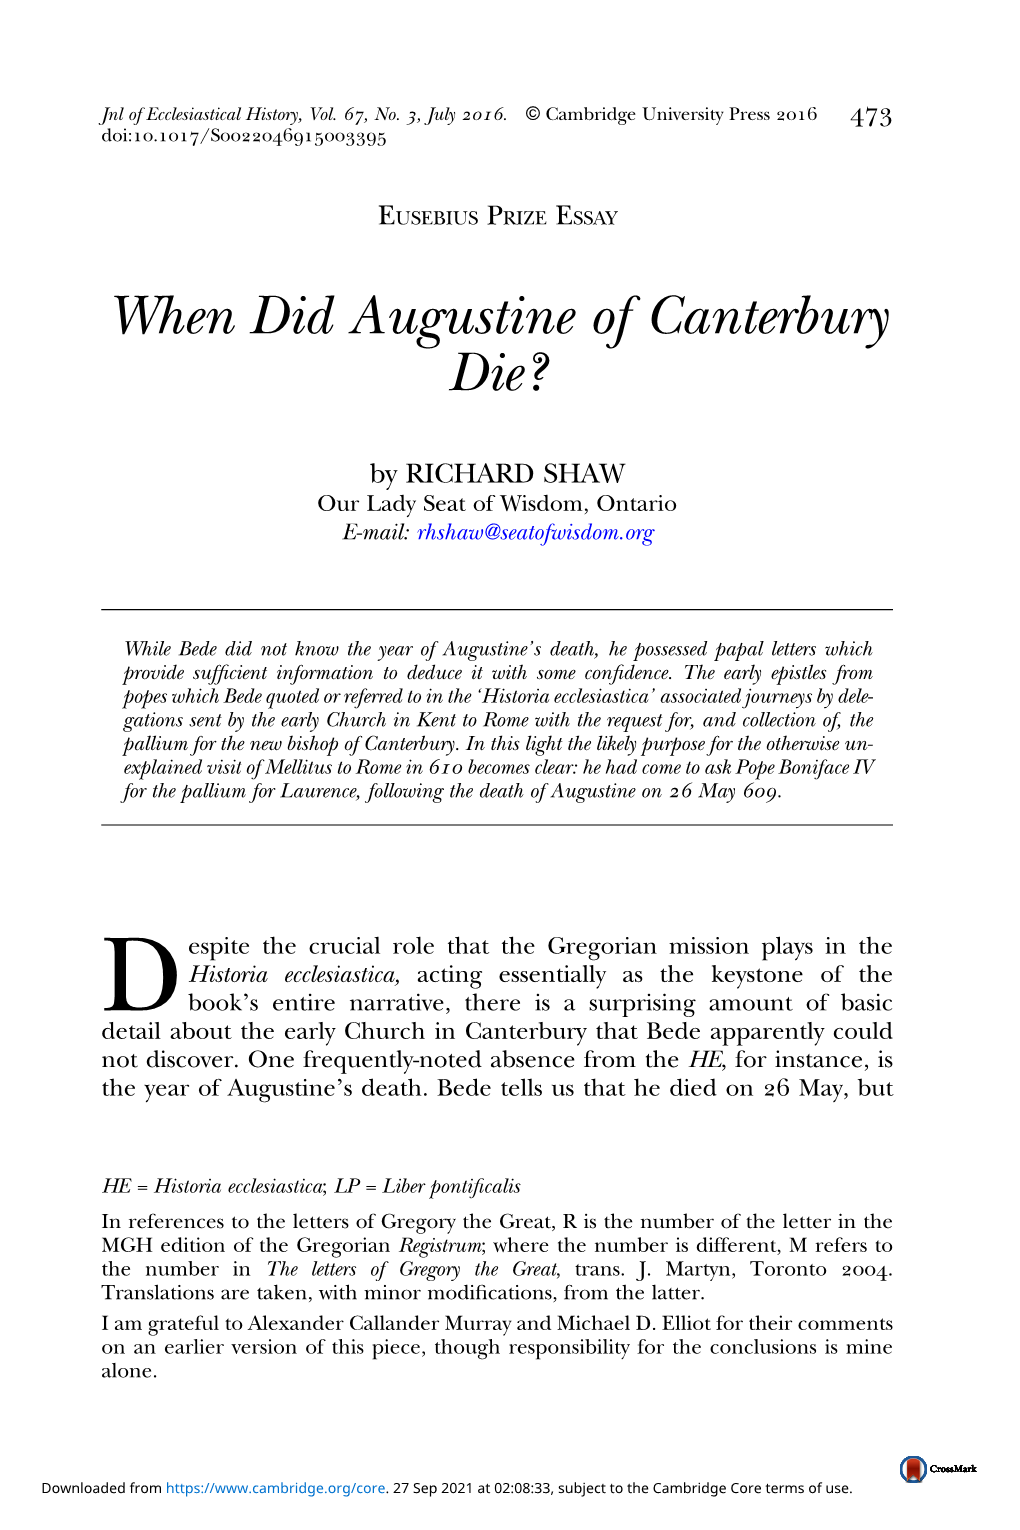 When Did Augustine of Canterbury Die?